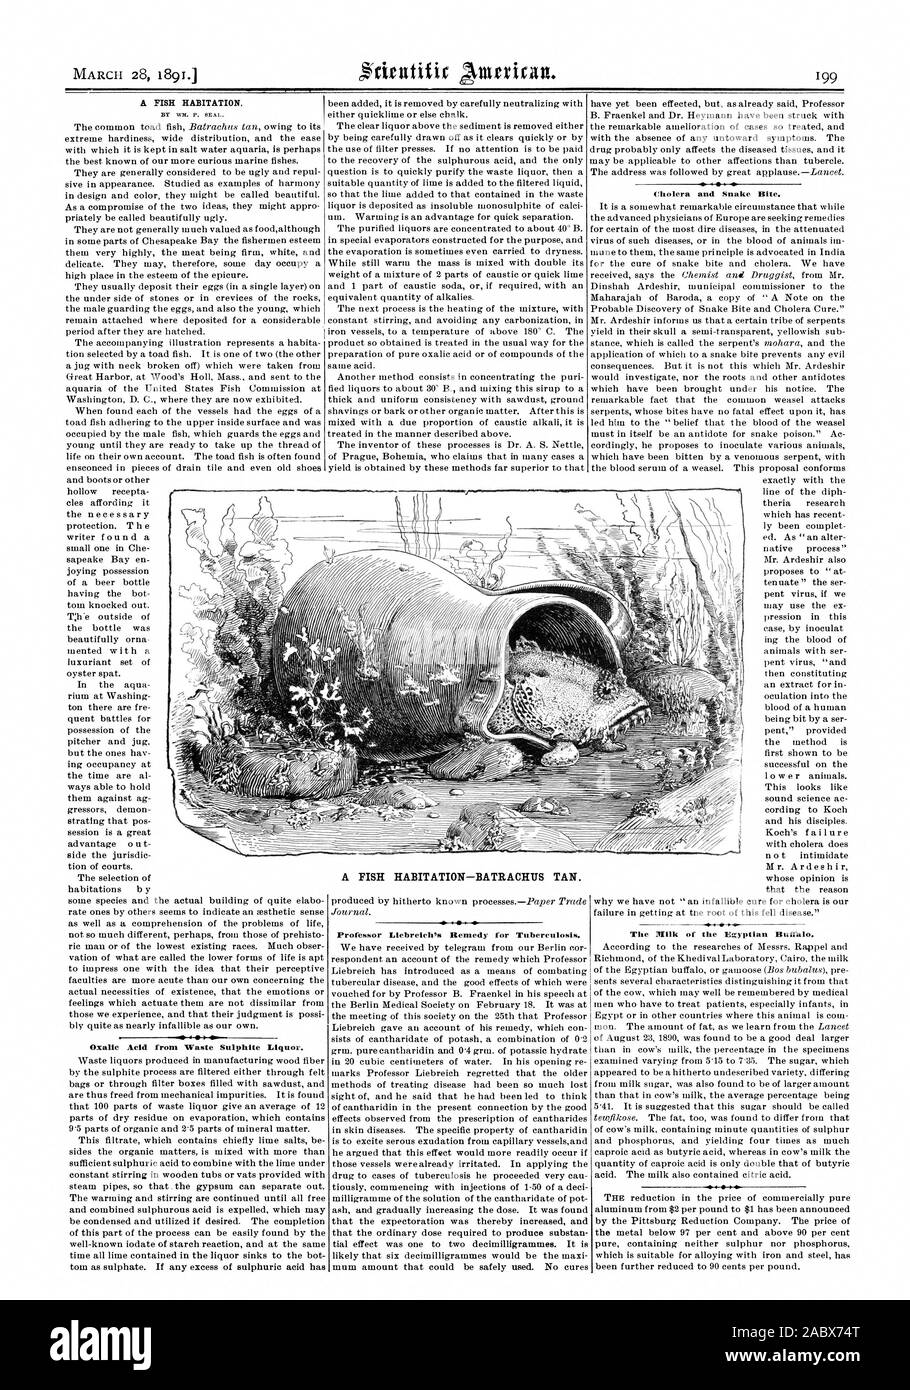 MARCII 28 1891 Oxalic Acid from Waste Sulphite Liquor. Professor Liebreicles Remedy for Tuberculosis. Cholera and Snake Bite. A FISH HABITATION—BATRACHUS TAN., scientific american, 1891-03-28 Stock Photo